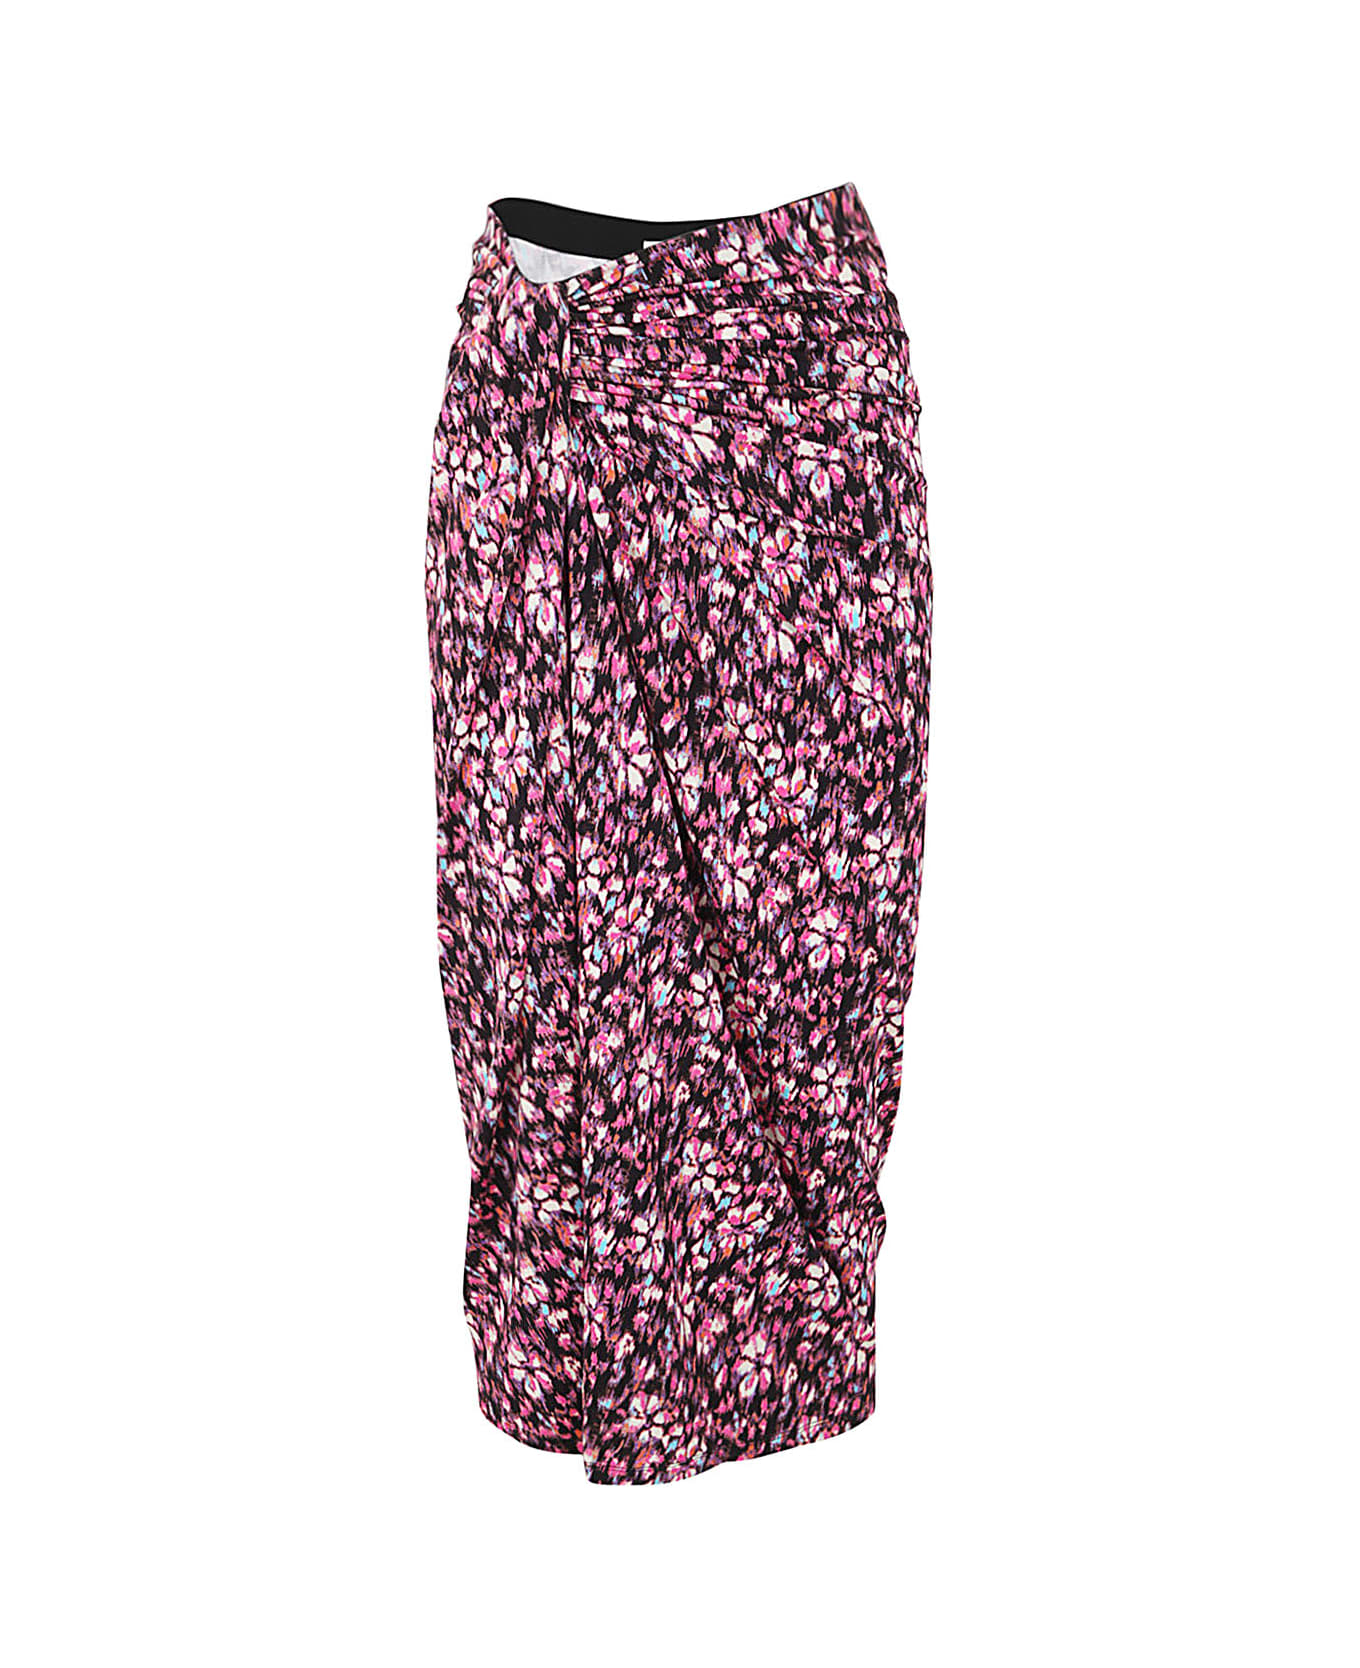 Marant Étoile Floral-printed Twist-detailed Crepe Skirt - Mipk Midnight Pink